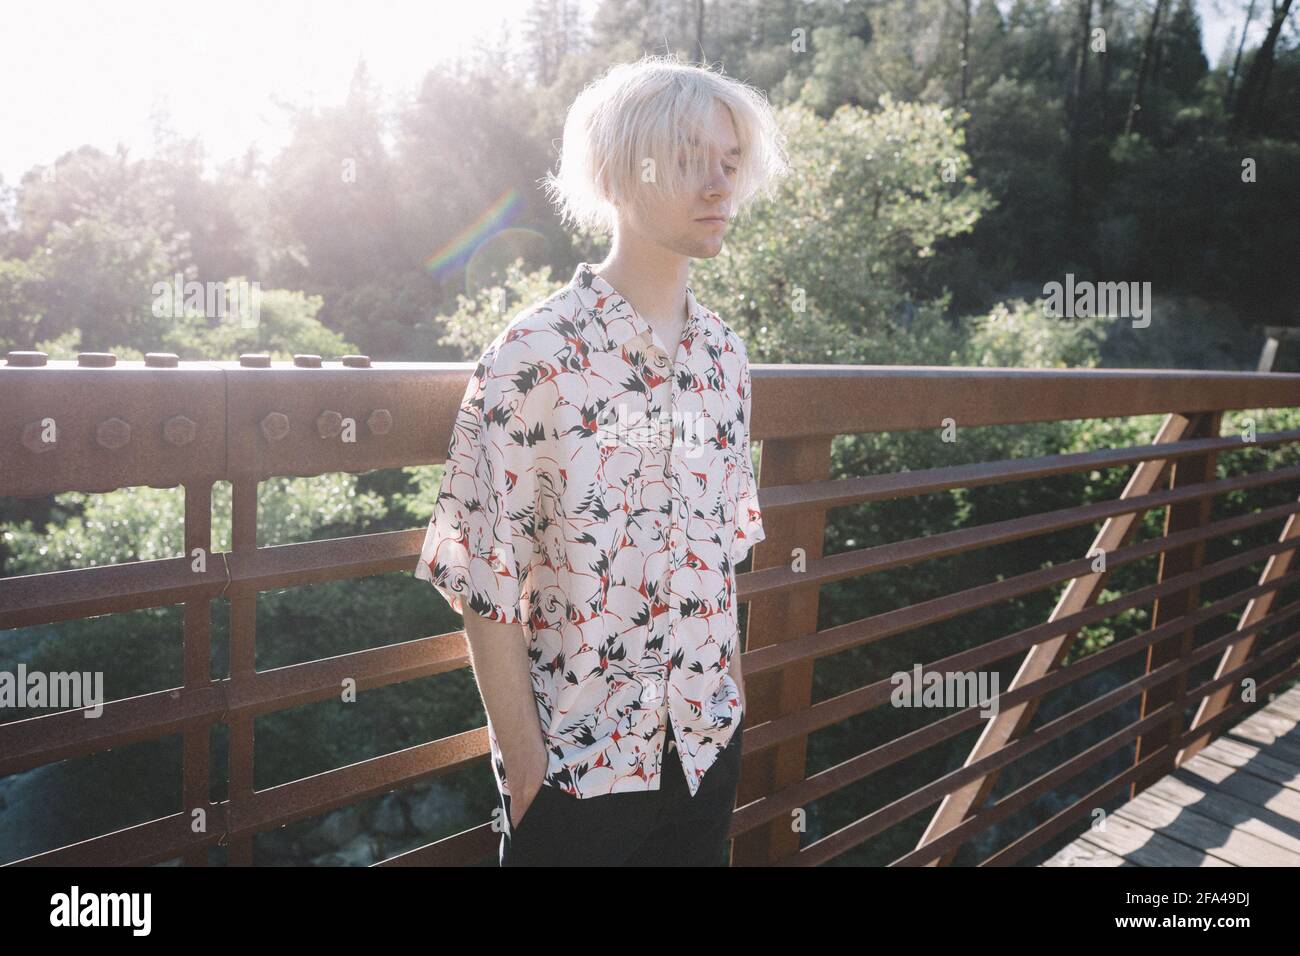 Slim Teen Stands Hands in Pockets Backlit on Bridge looking Serious Stock Photo